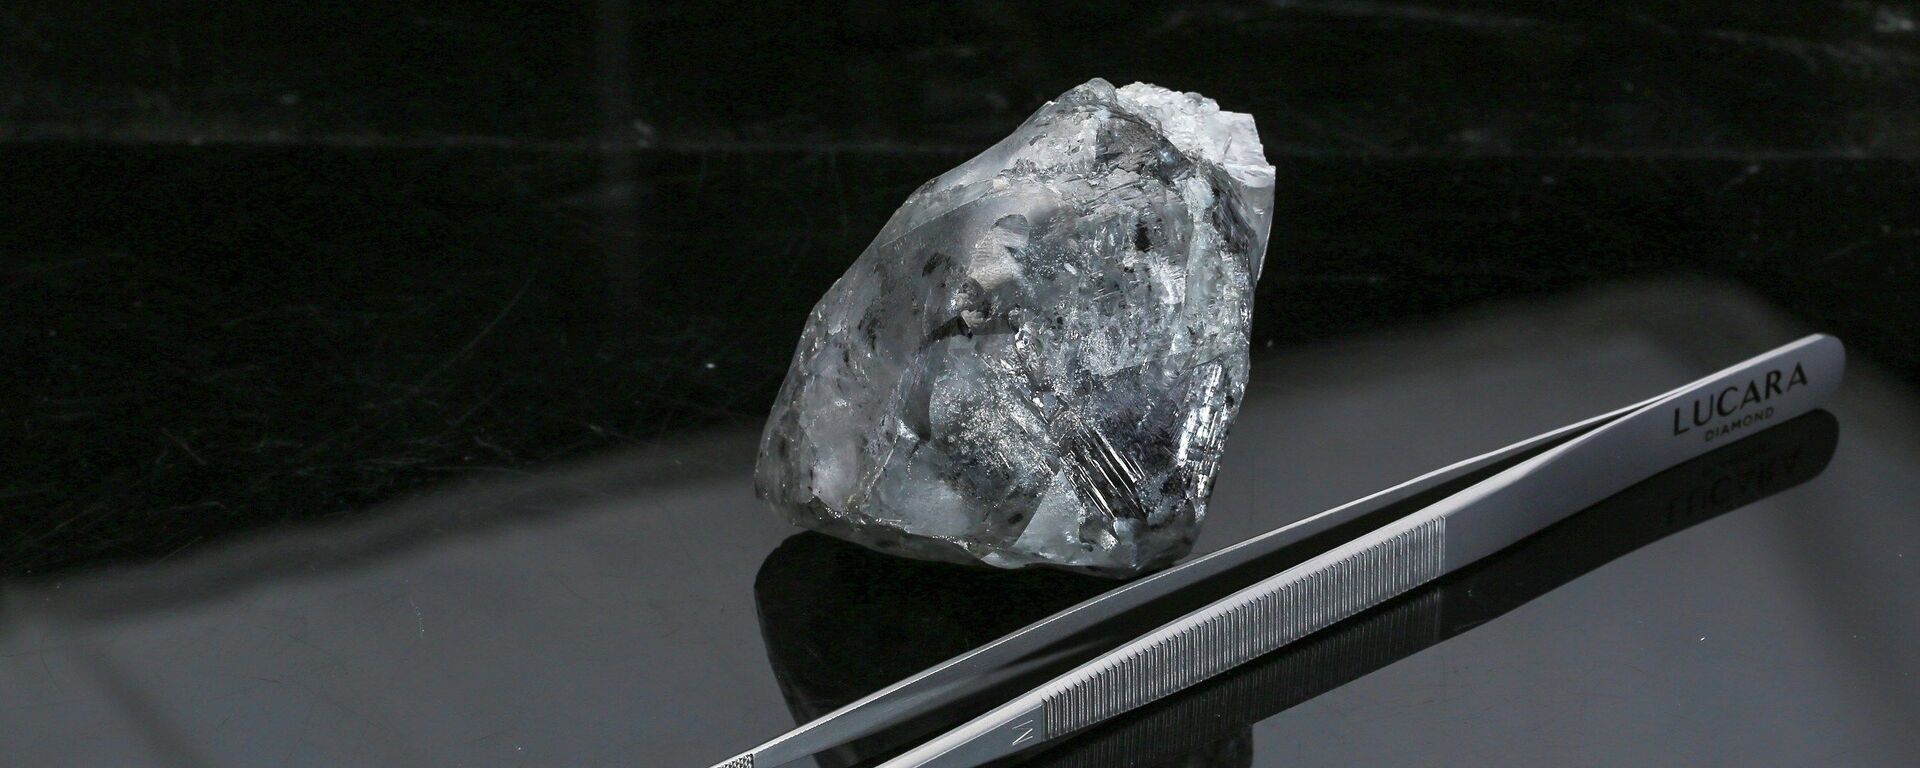 El diamante blanco de 998 quilates encontrado en la mina de Karowe en Botswana - Sputnik Mundo, 1920, 17.02.2021